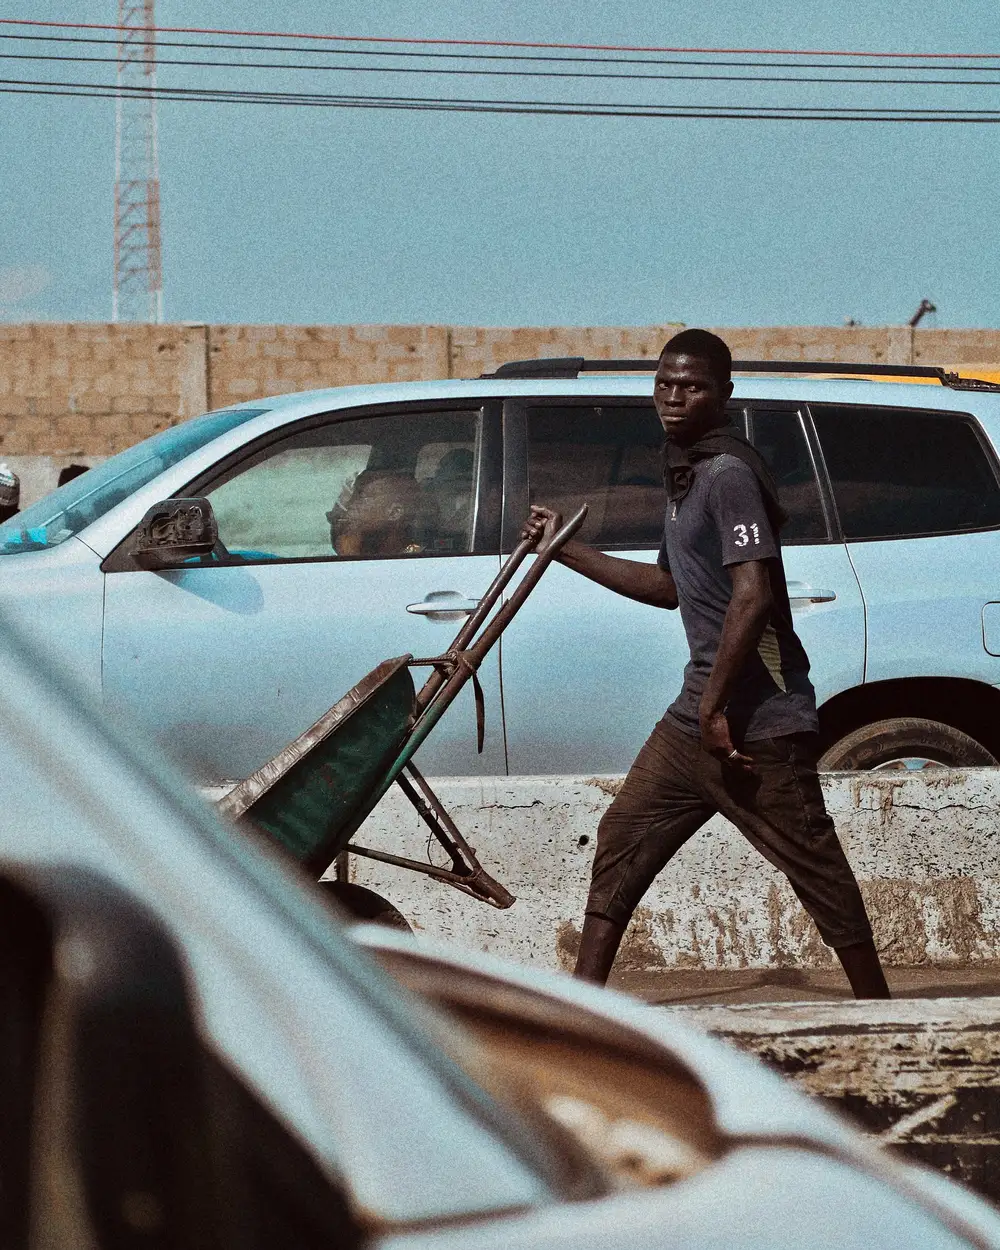 Alabaru (A Porter) rolling a wheel barrow in Lagos Market as a means of survival.